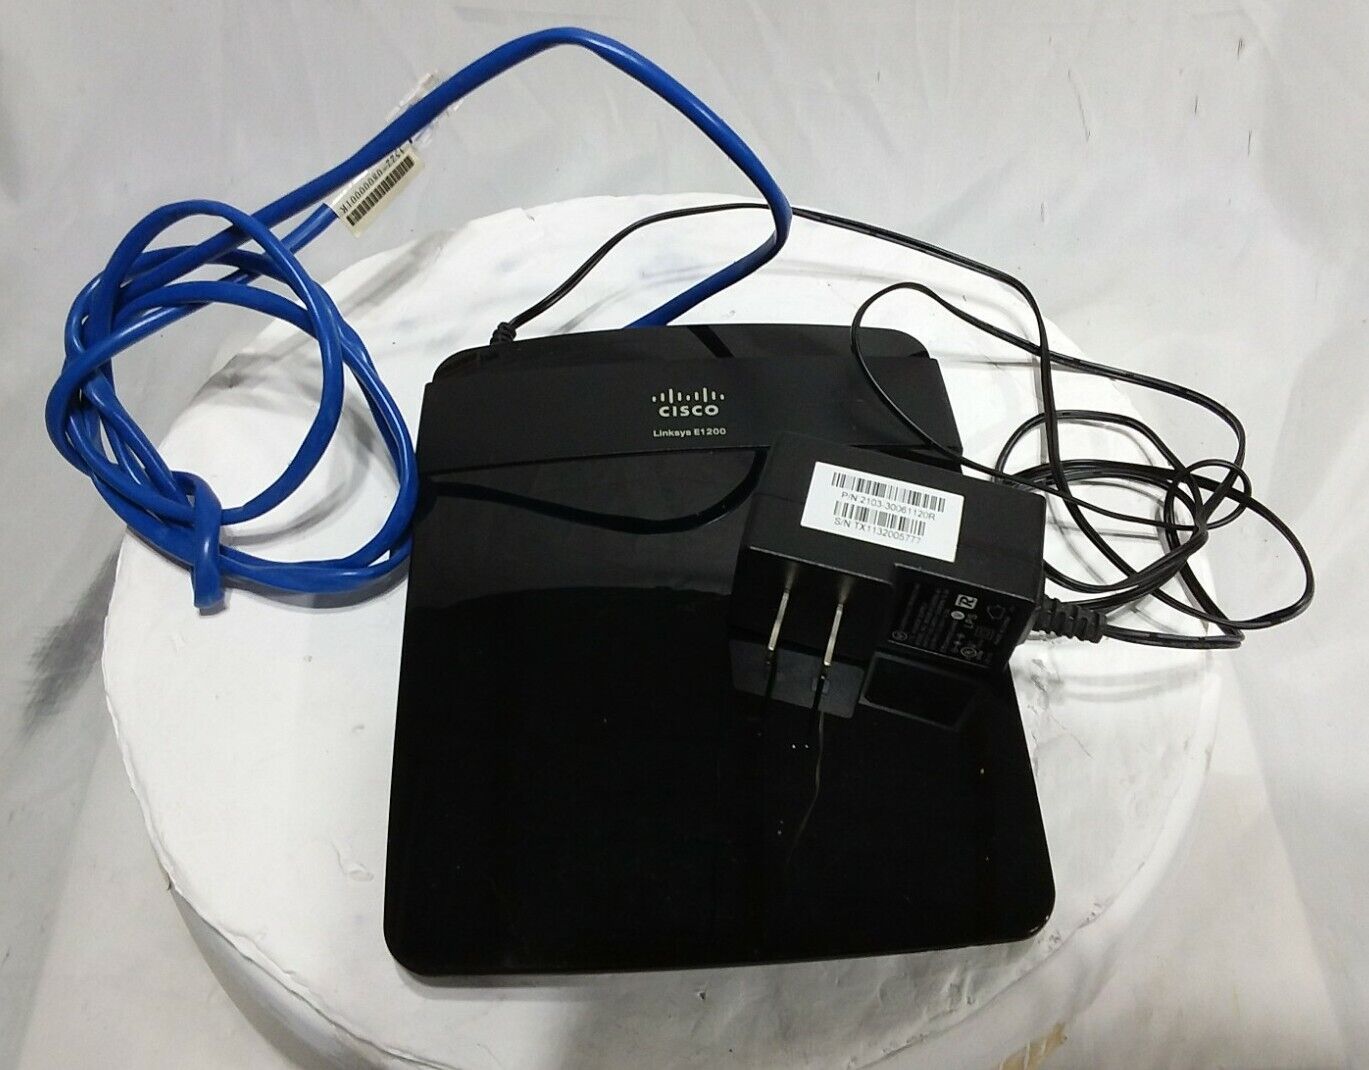 Cisco Linksys E1200 4-Port Gigabit Ethernet Dual-Band Wireless Router & Adapter